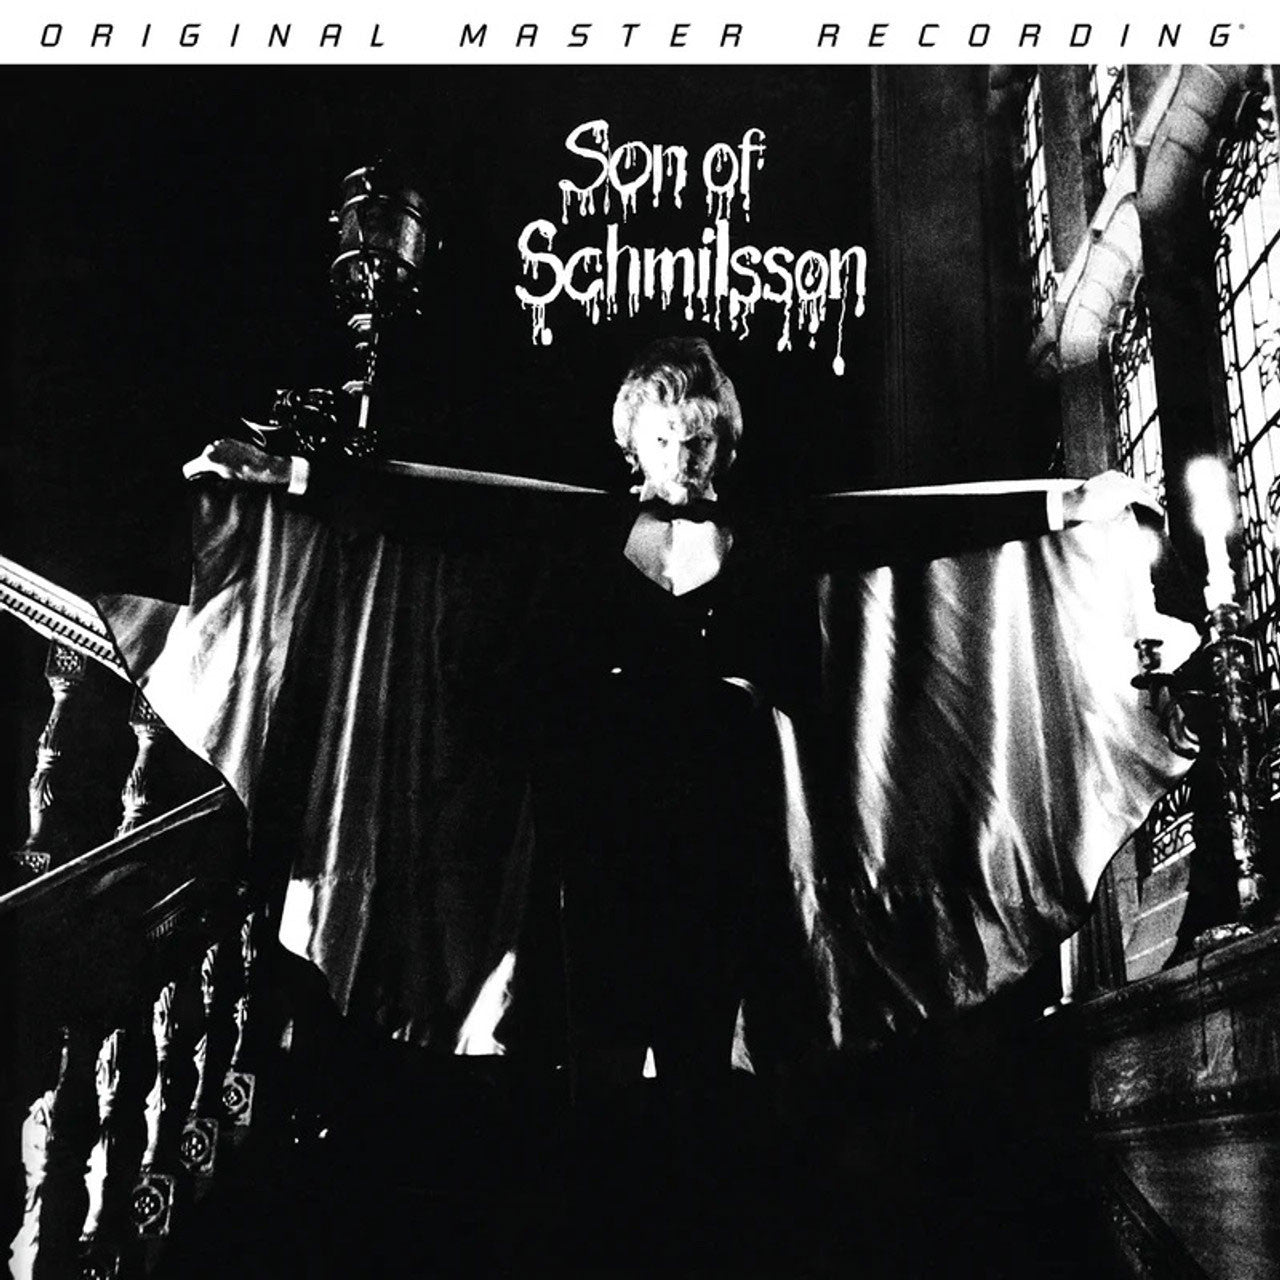 Harry Nilsson - Son Of Schmilsson [2LP] (180 Gram 45RPM Audiophile Vinyl, remastered, gatefold, numbered) MOBILE FIDELITY